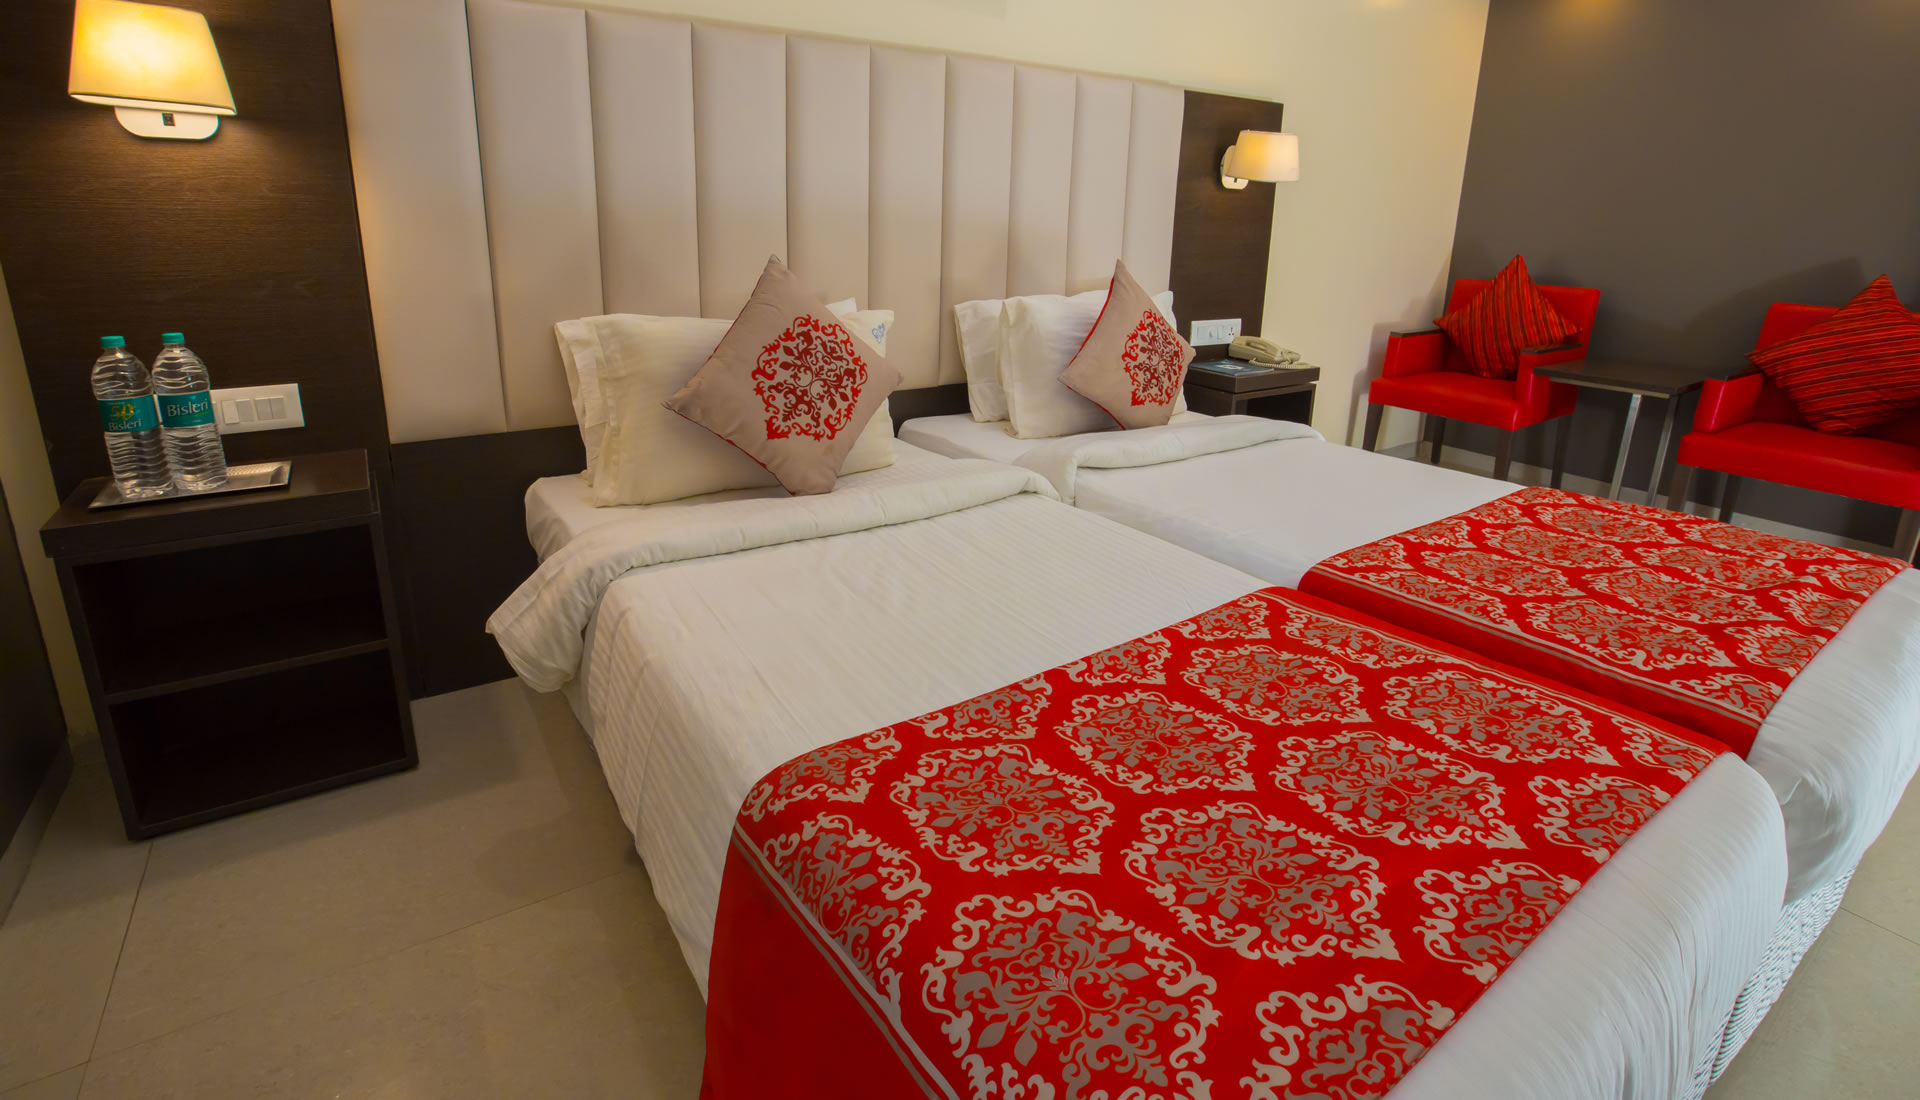 Hotels near Palani temple | Palani online room booking - Ganpat Grand,Palani ,Hotels & Resorts,Hotels